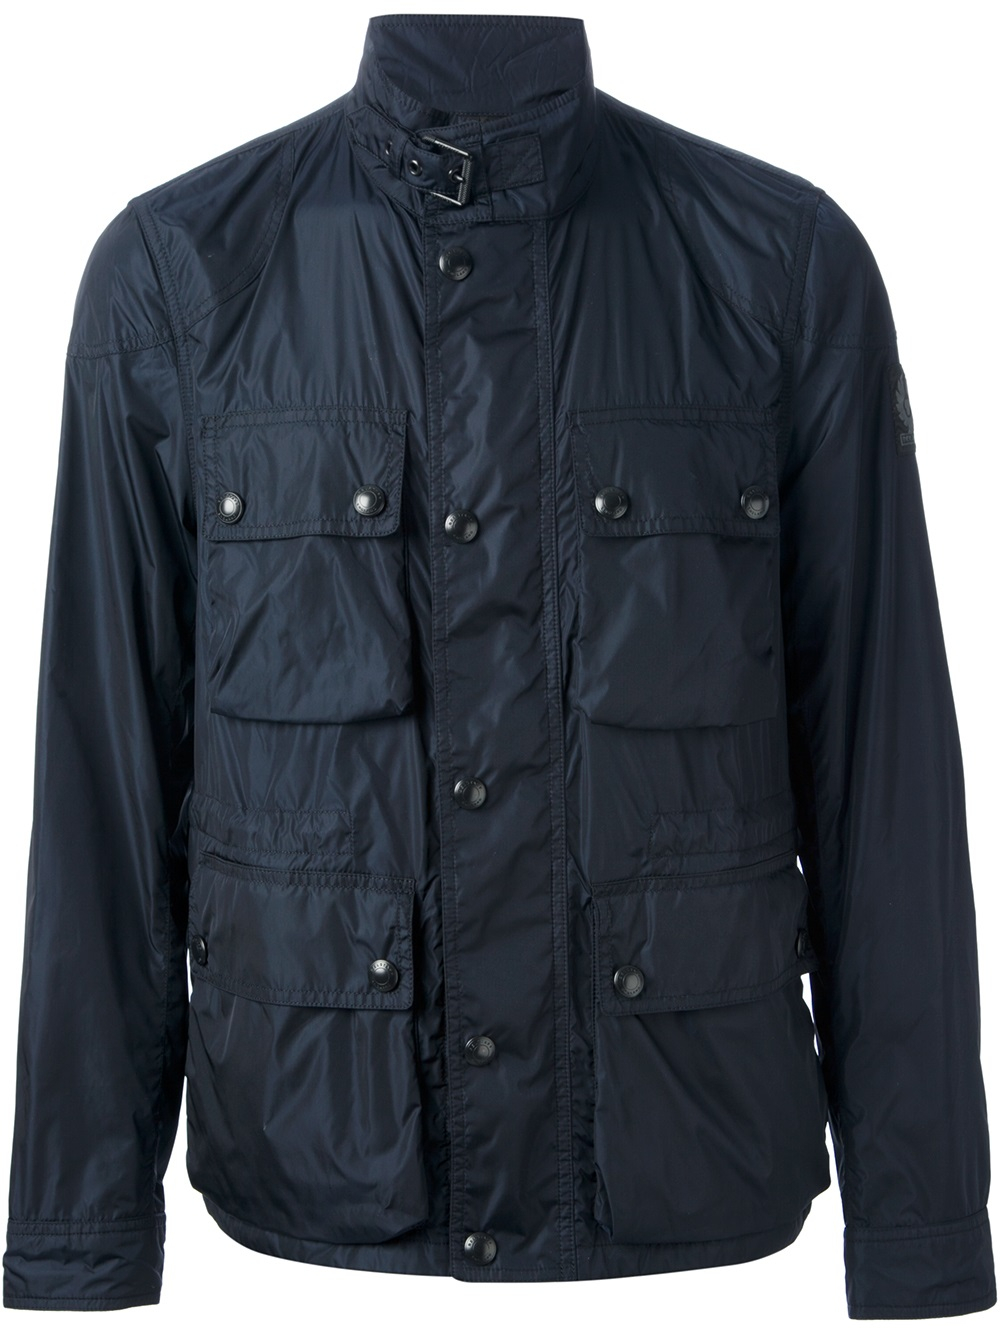 Belstaff Barningham Jacket in Blue for Men - Lyst